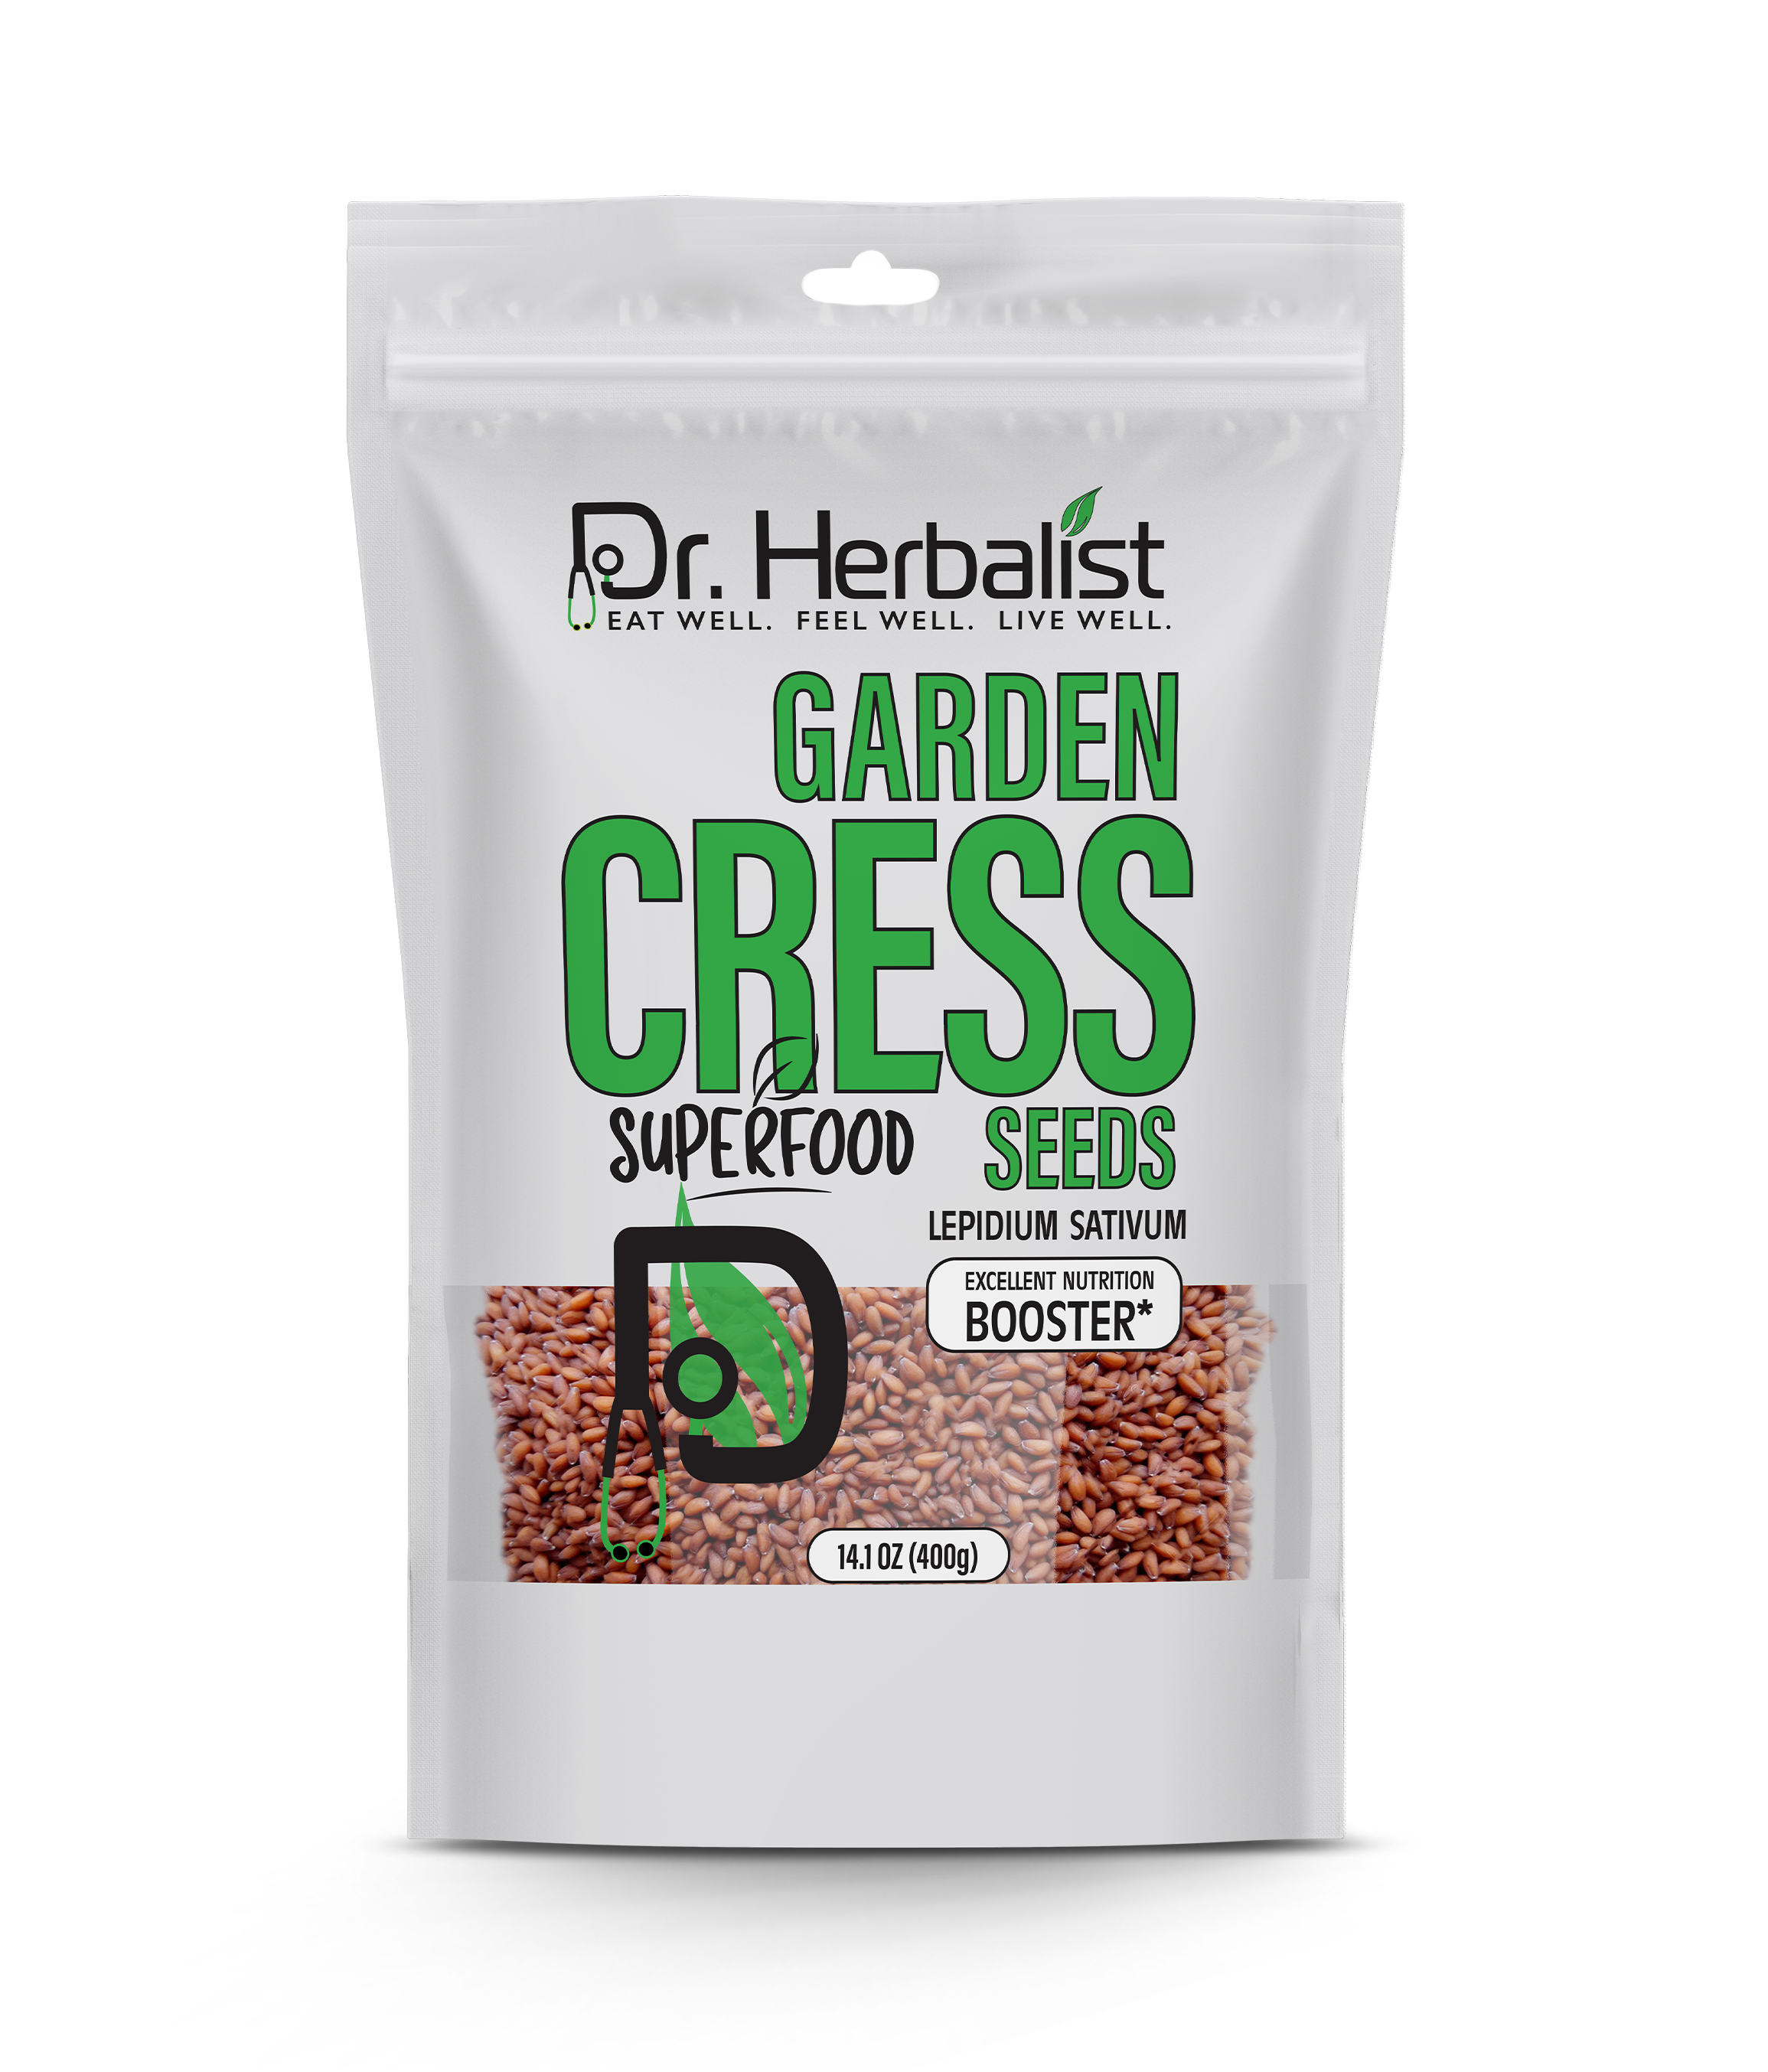 DR. HERBALIST Garden Cress Seeds 400g